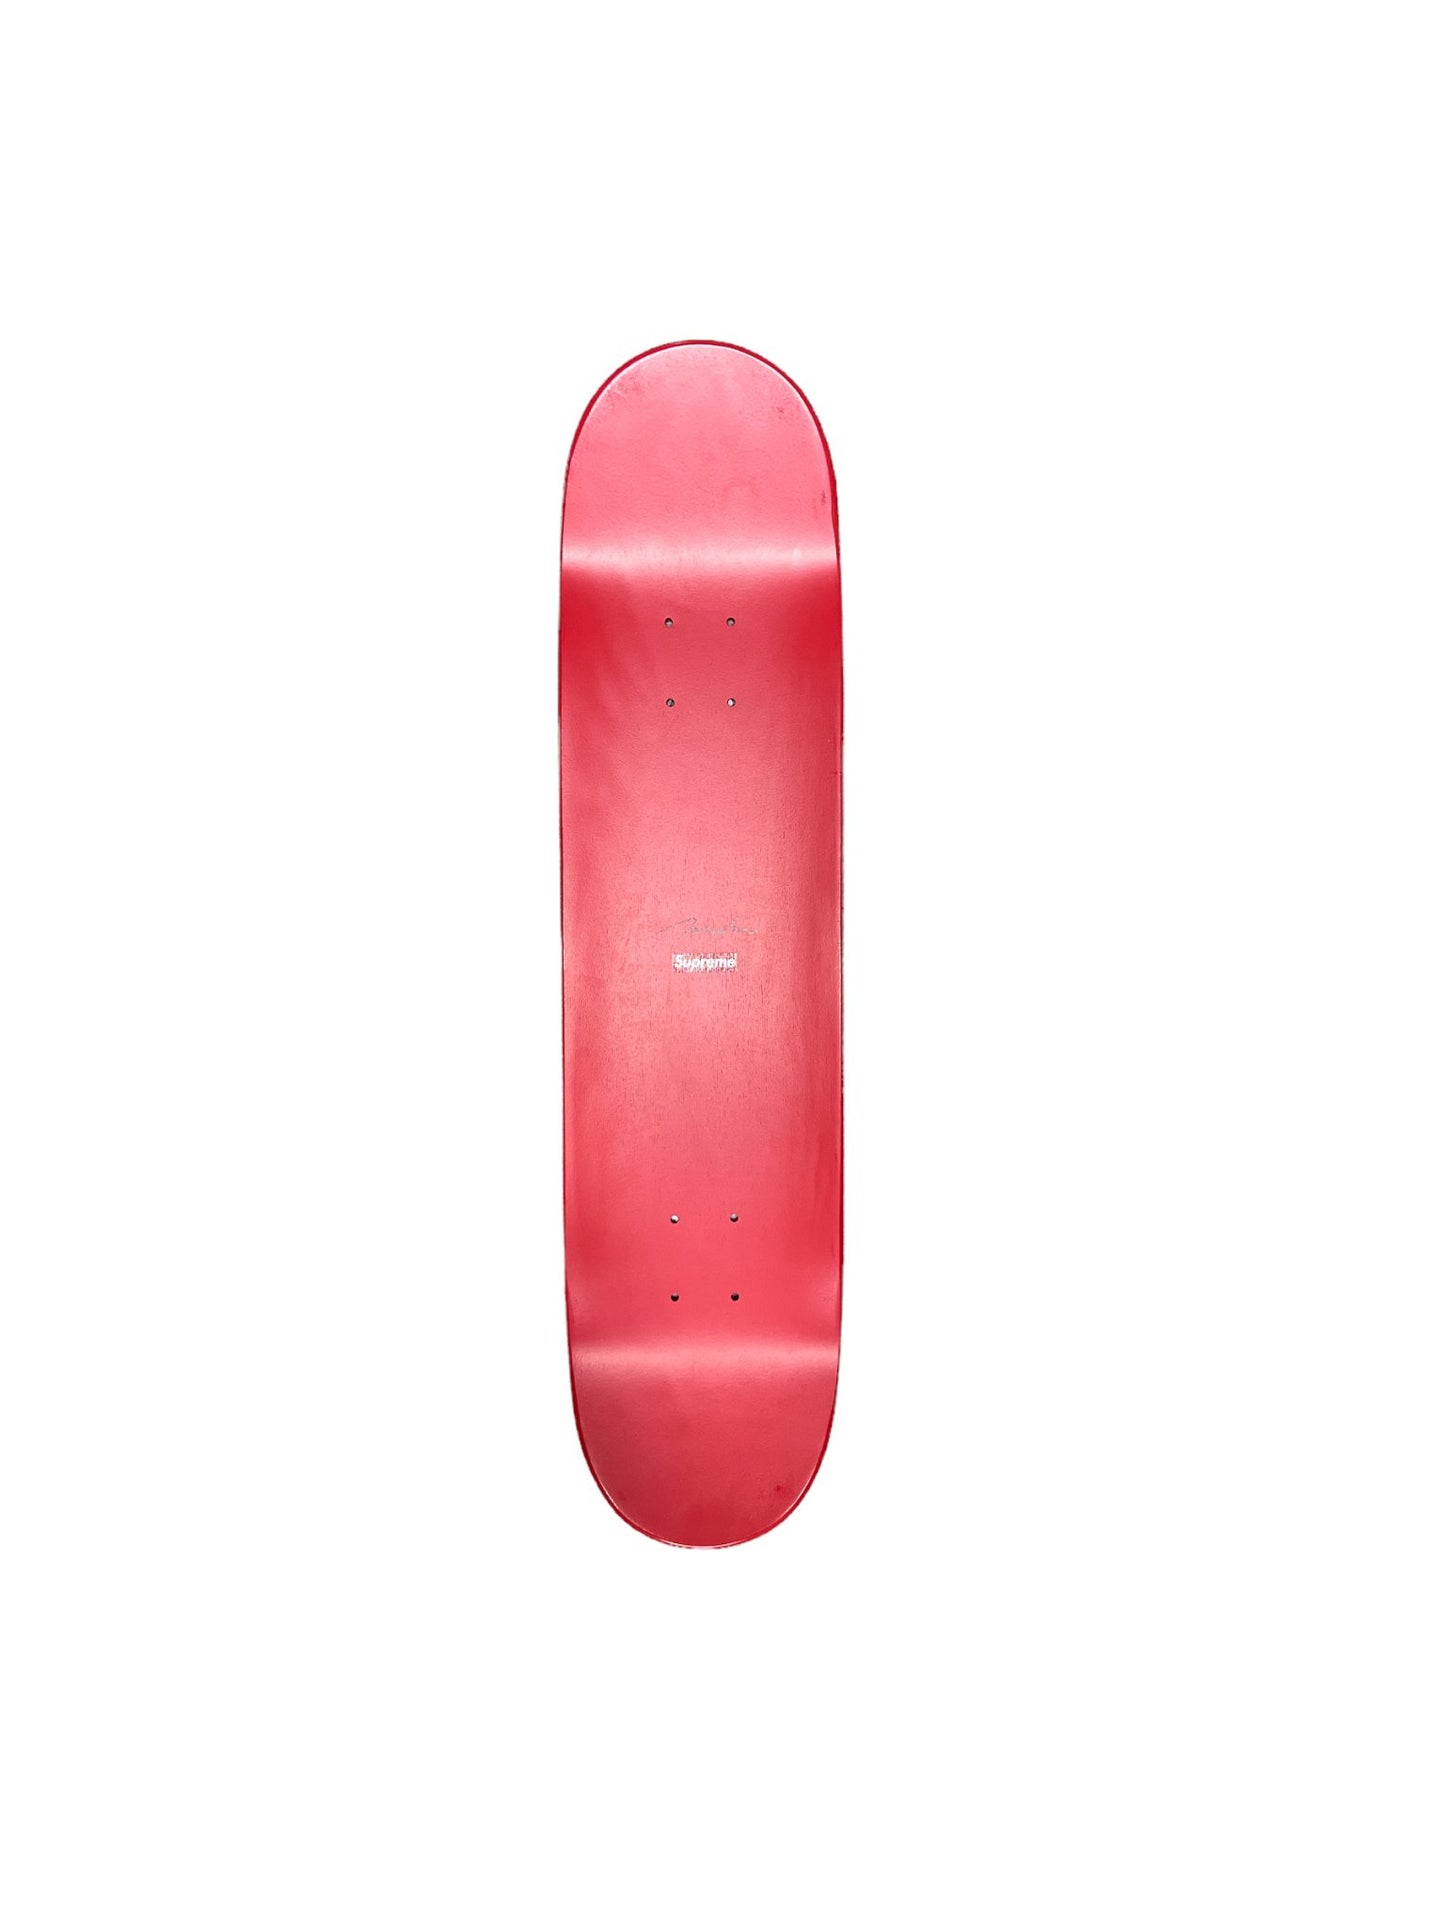 Takashi Murakami x Supreme Skateboard Deck Ponchi-Kun Red (Signed by Murakami) - Supra Sneakers